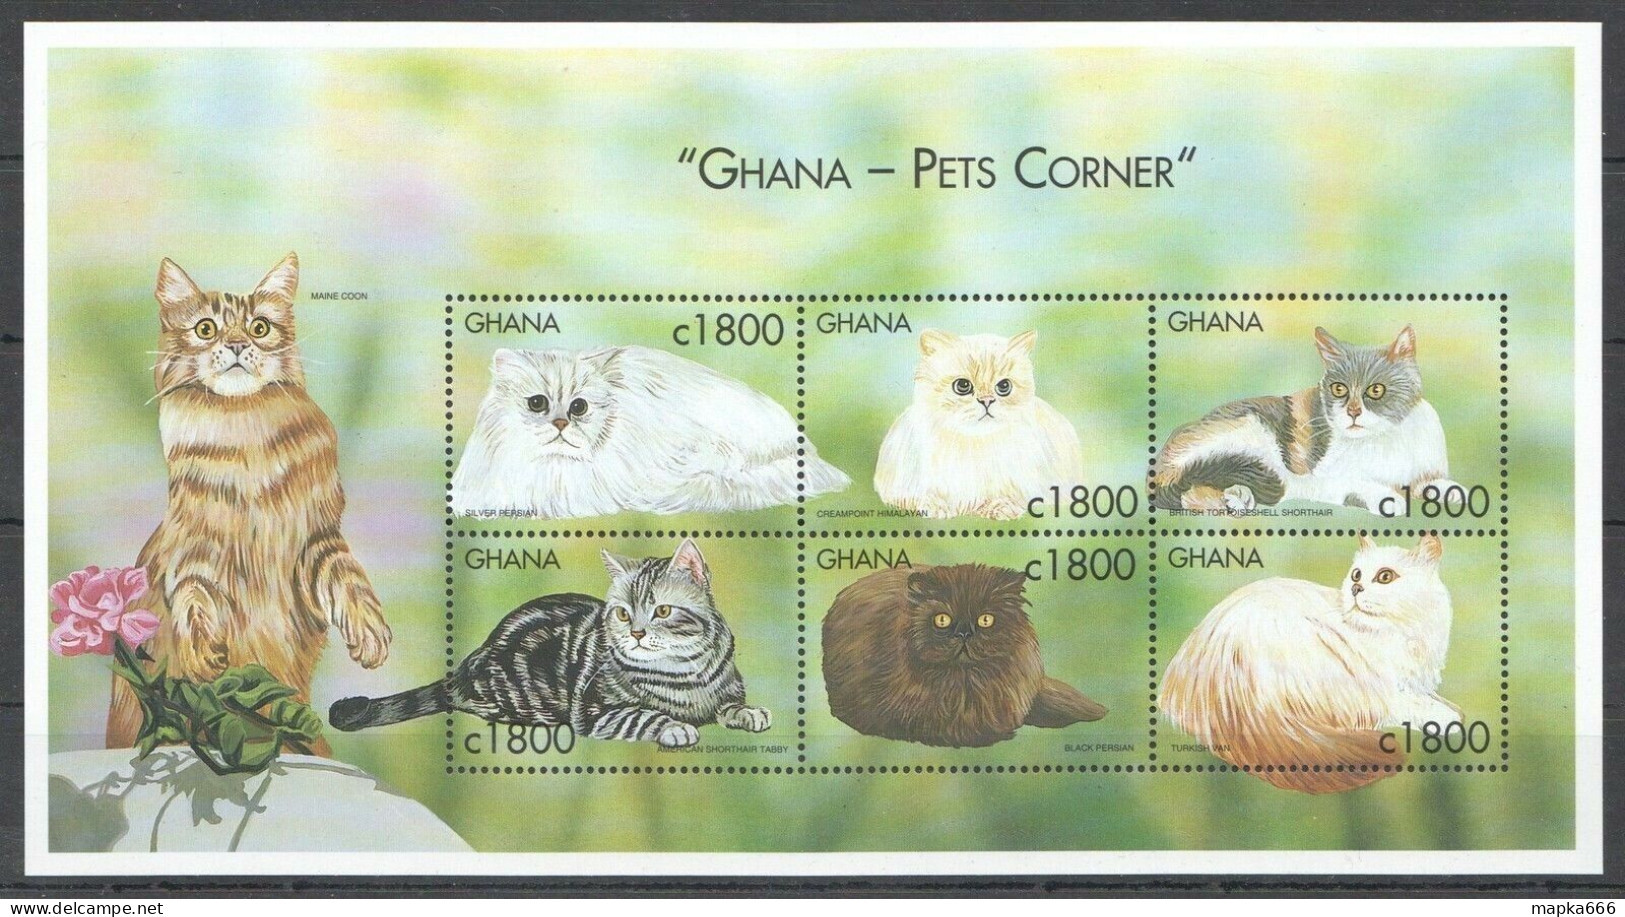 Pk035 Ghana Fauna Pets Corner Cats 1Kb Mnh Stamps - Gatti